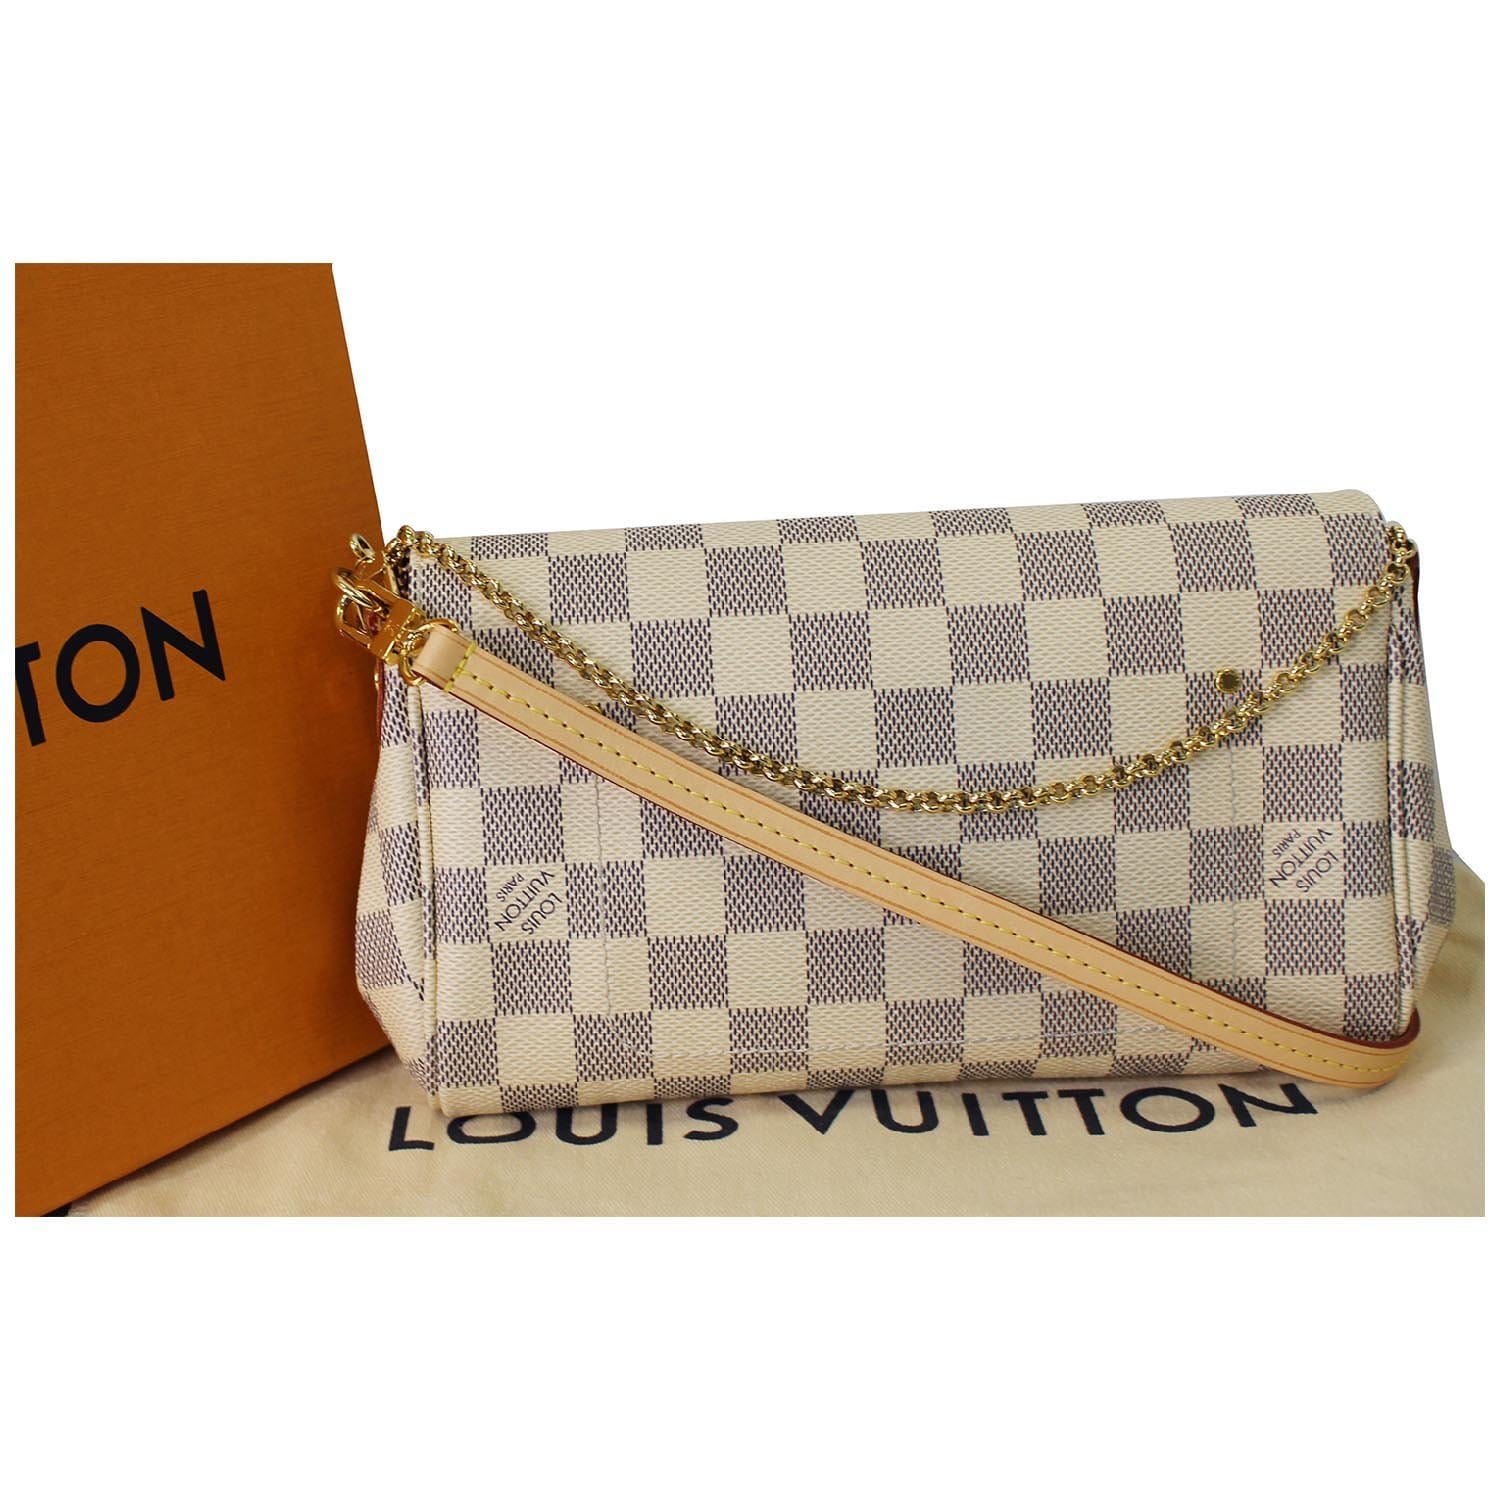 Louis Vuitton Damier Azur Favorite Pm - For Sale on 1stDibs